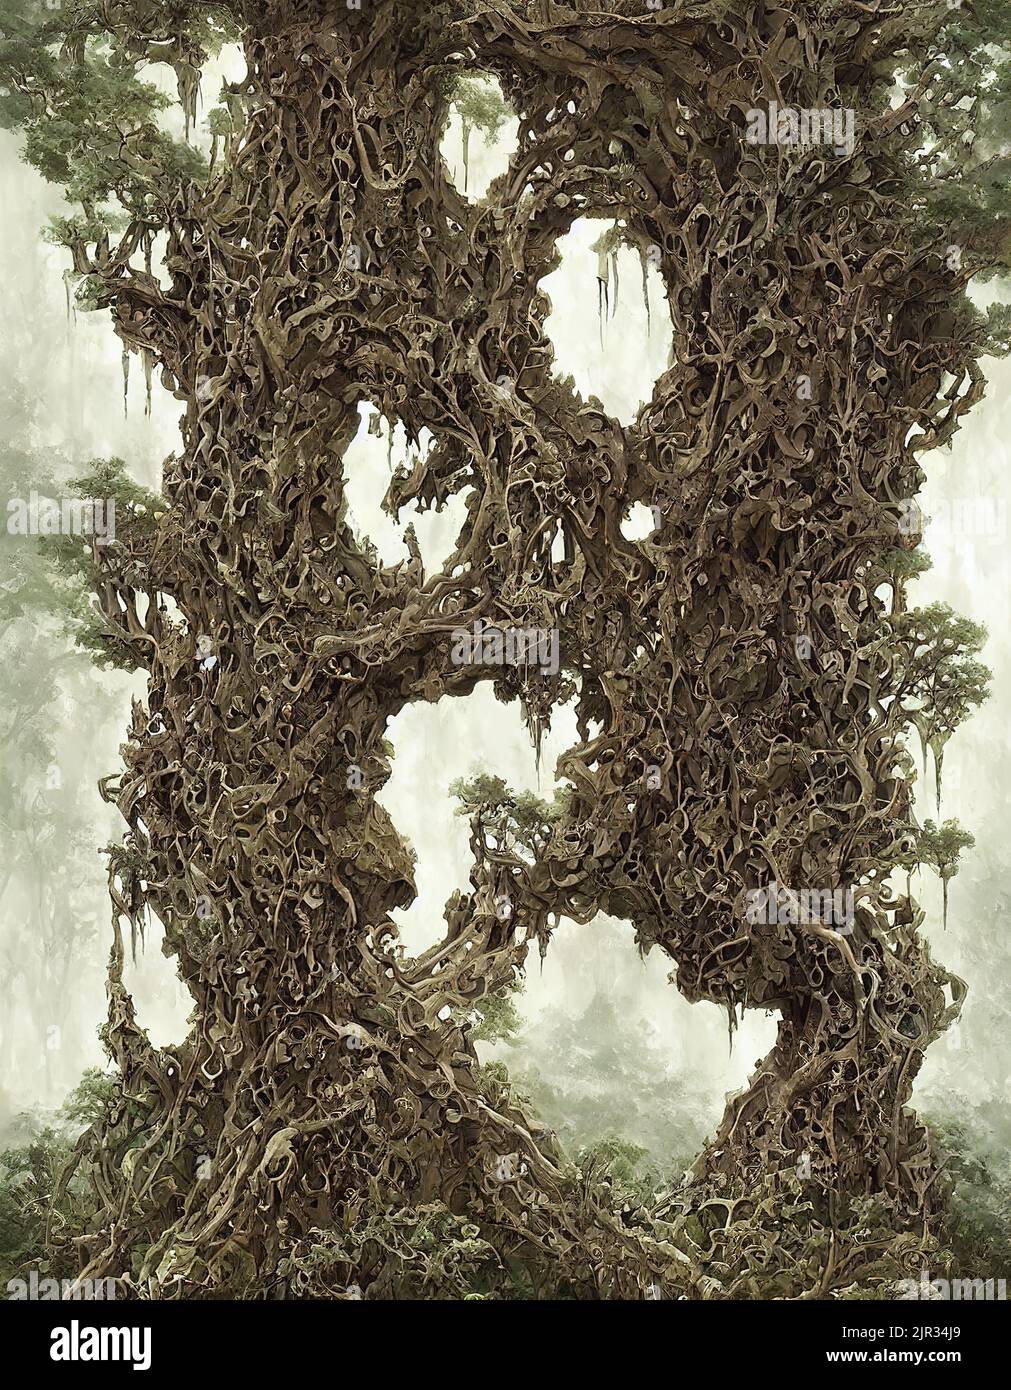 representación en 3d de un árbol de fantasía aterrador con extremidades kinky Foto de stock